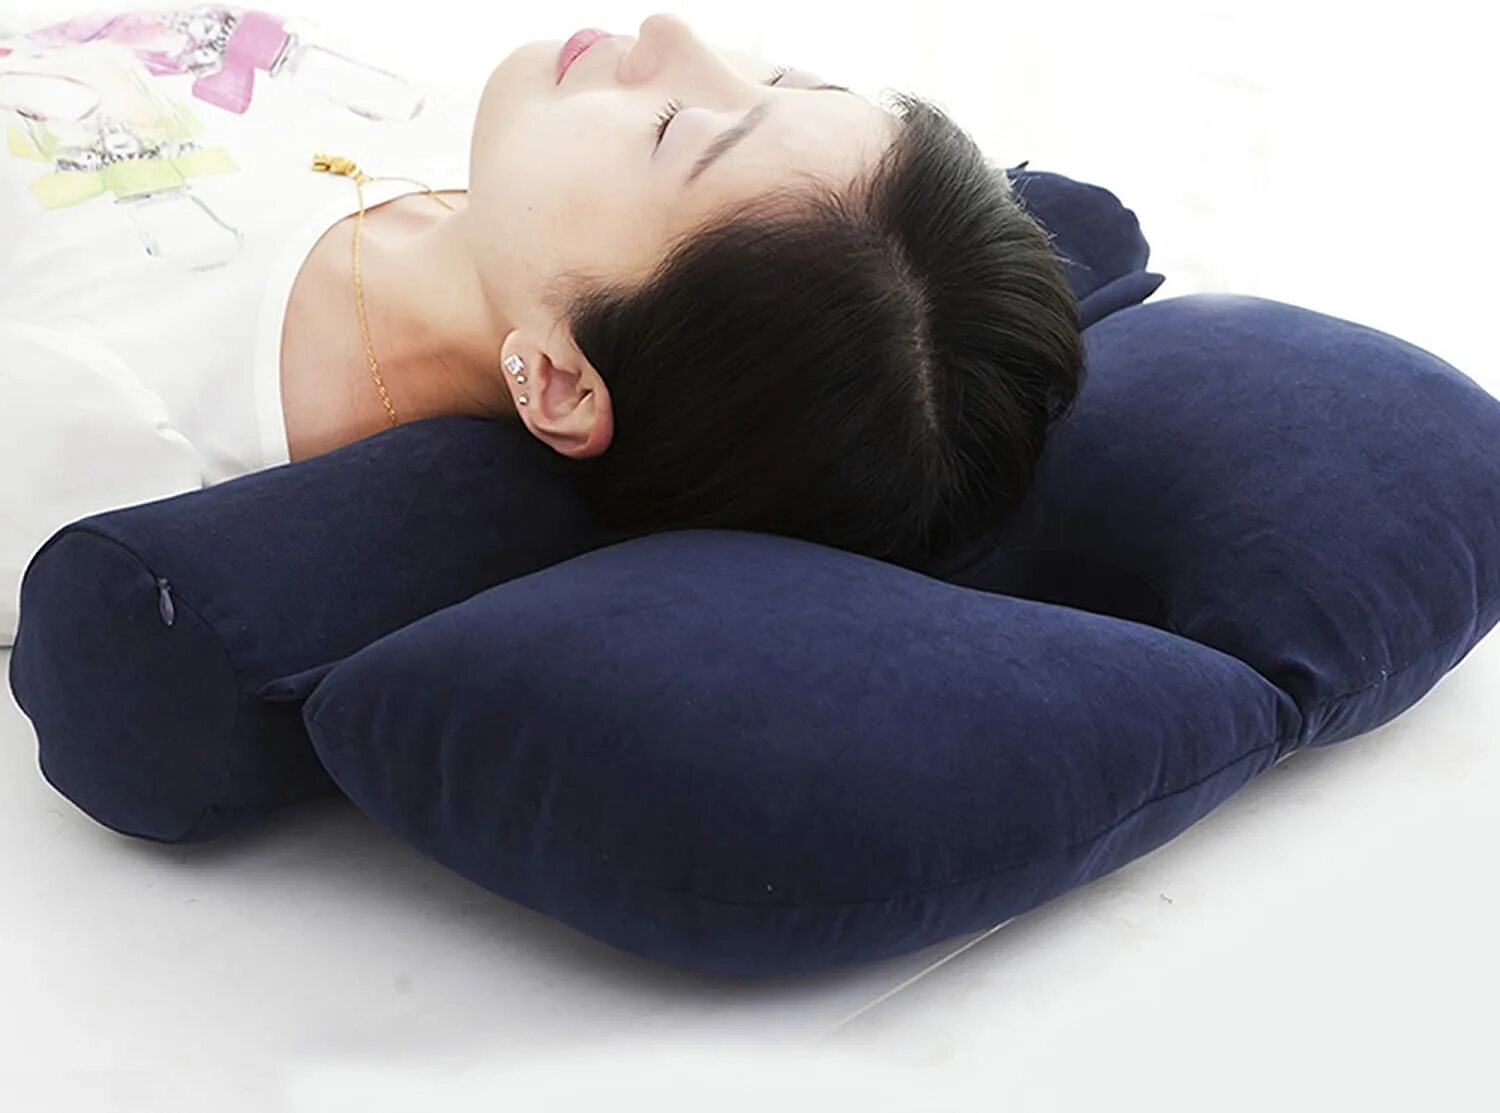 Затылок сон. Подушка Gravity Neck Pillow. Китайская подушка для сна. Китайская подушка для сна валик. Японская подушка для сна.